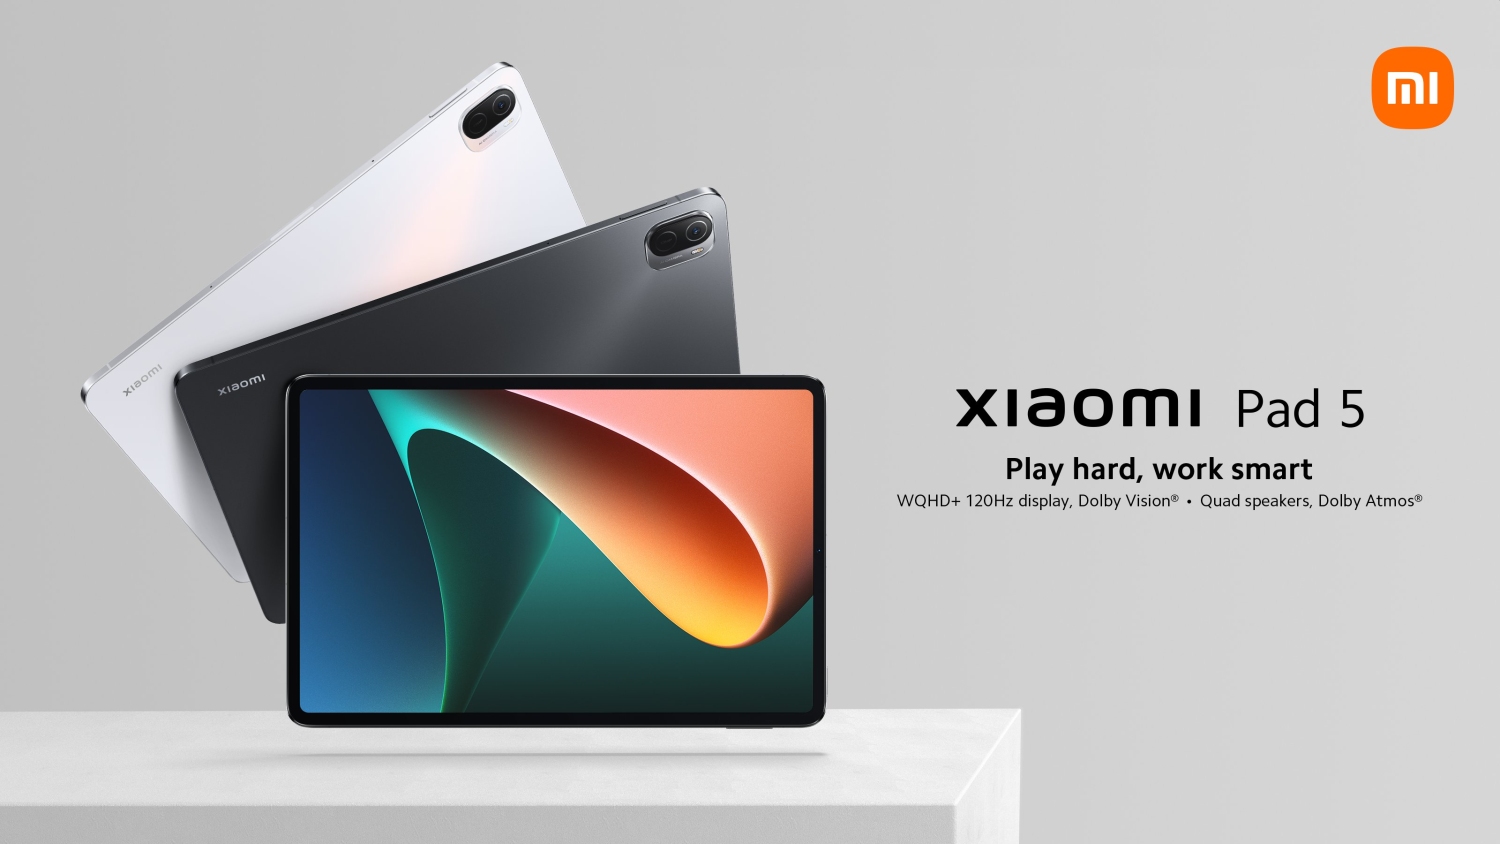 xiaomi pad 5 pro 6+128（CN版、大陸版、中国版）